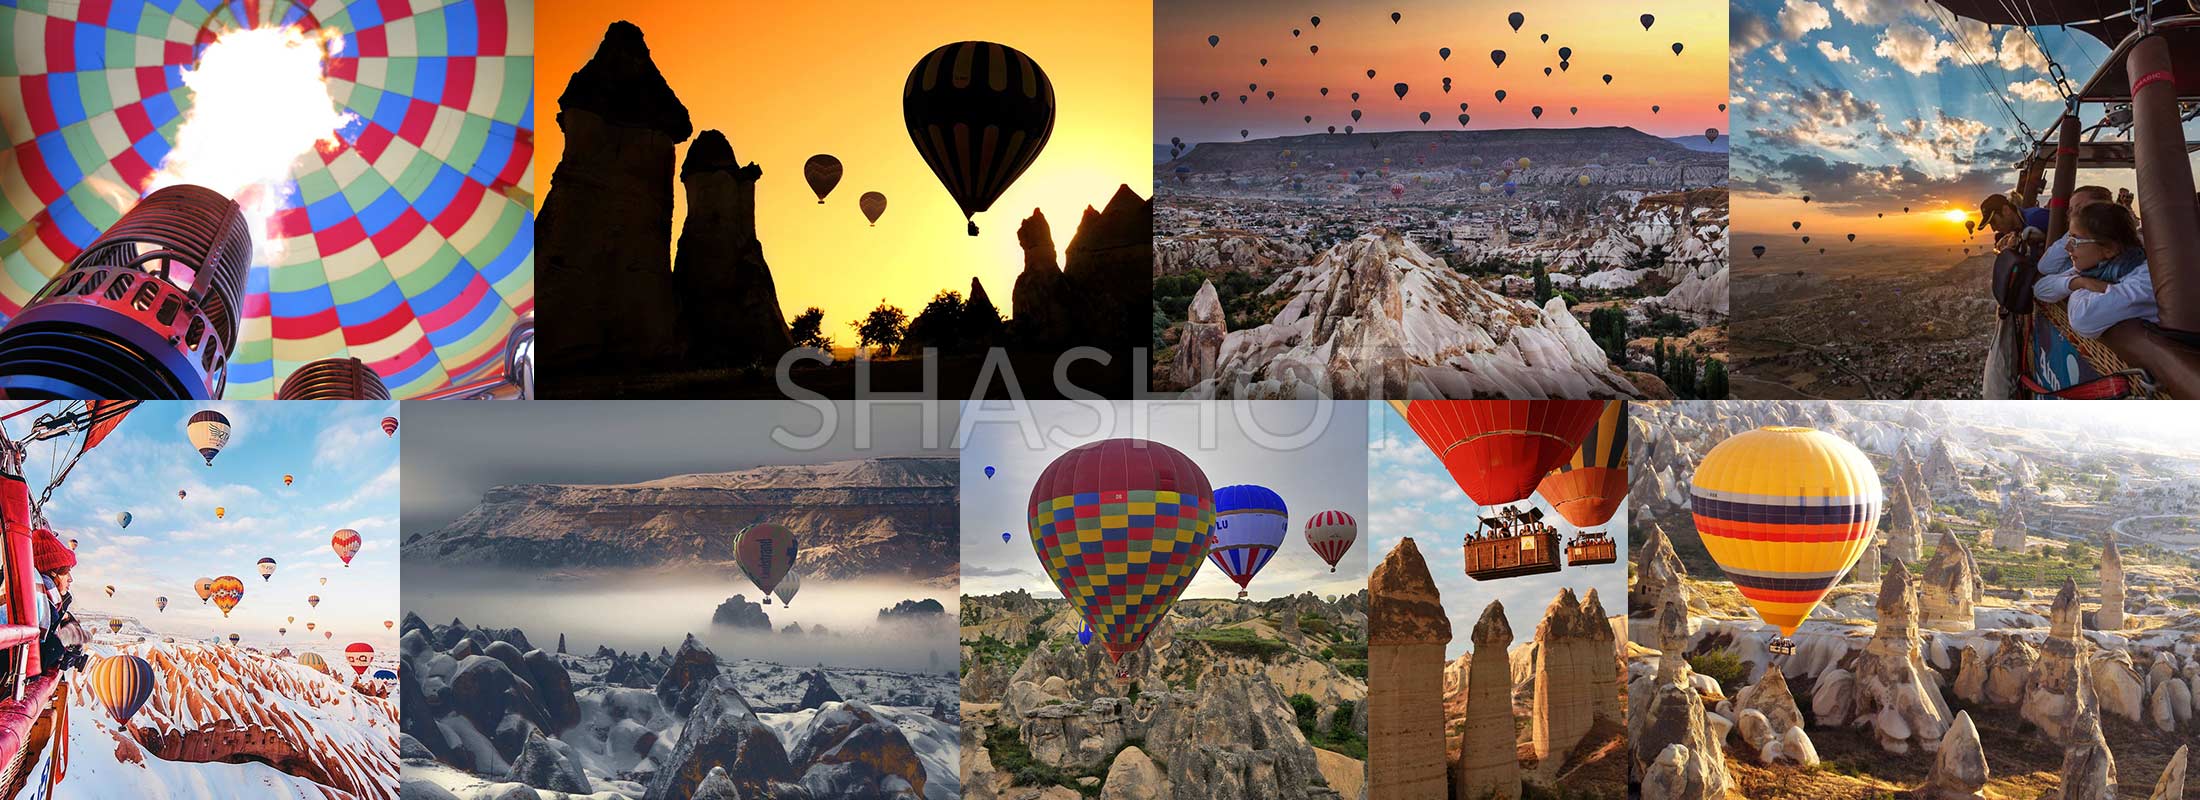 cappadocia-balloon-tour-turkey